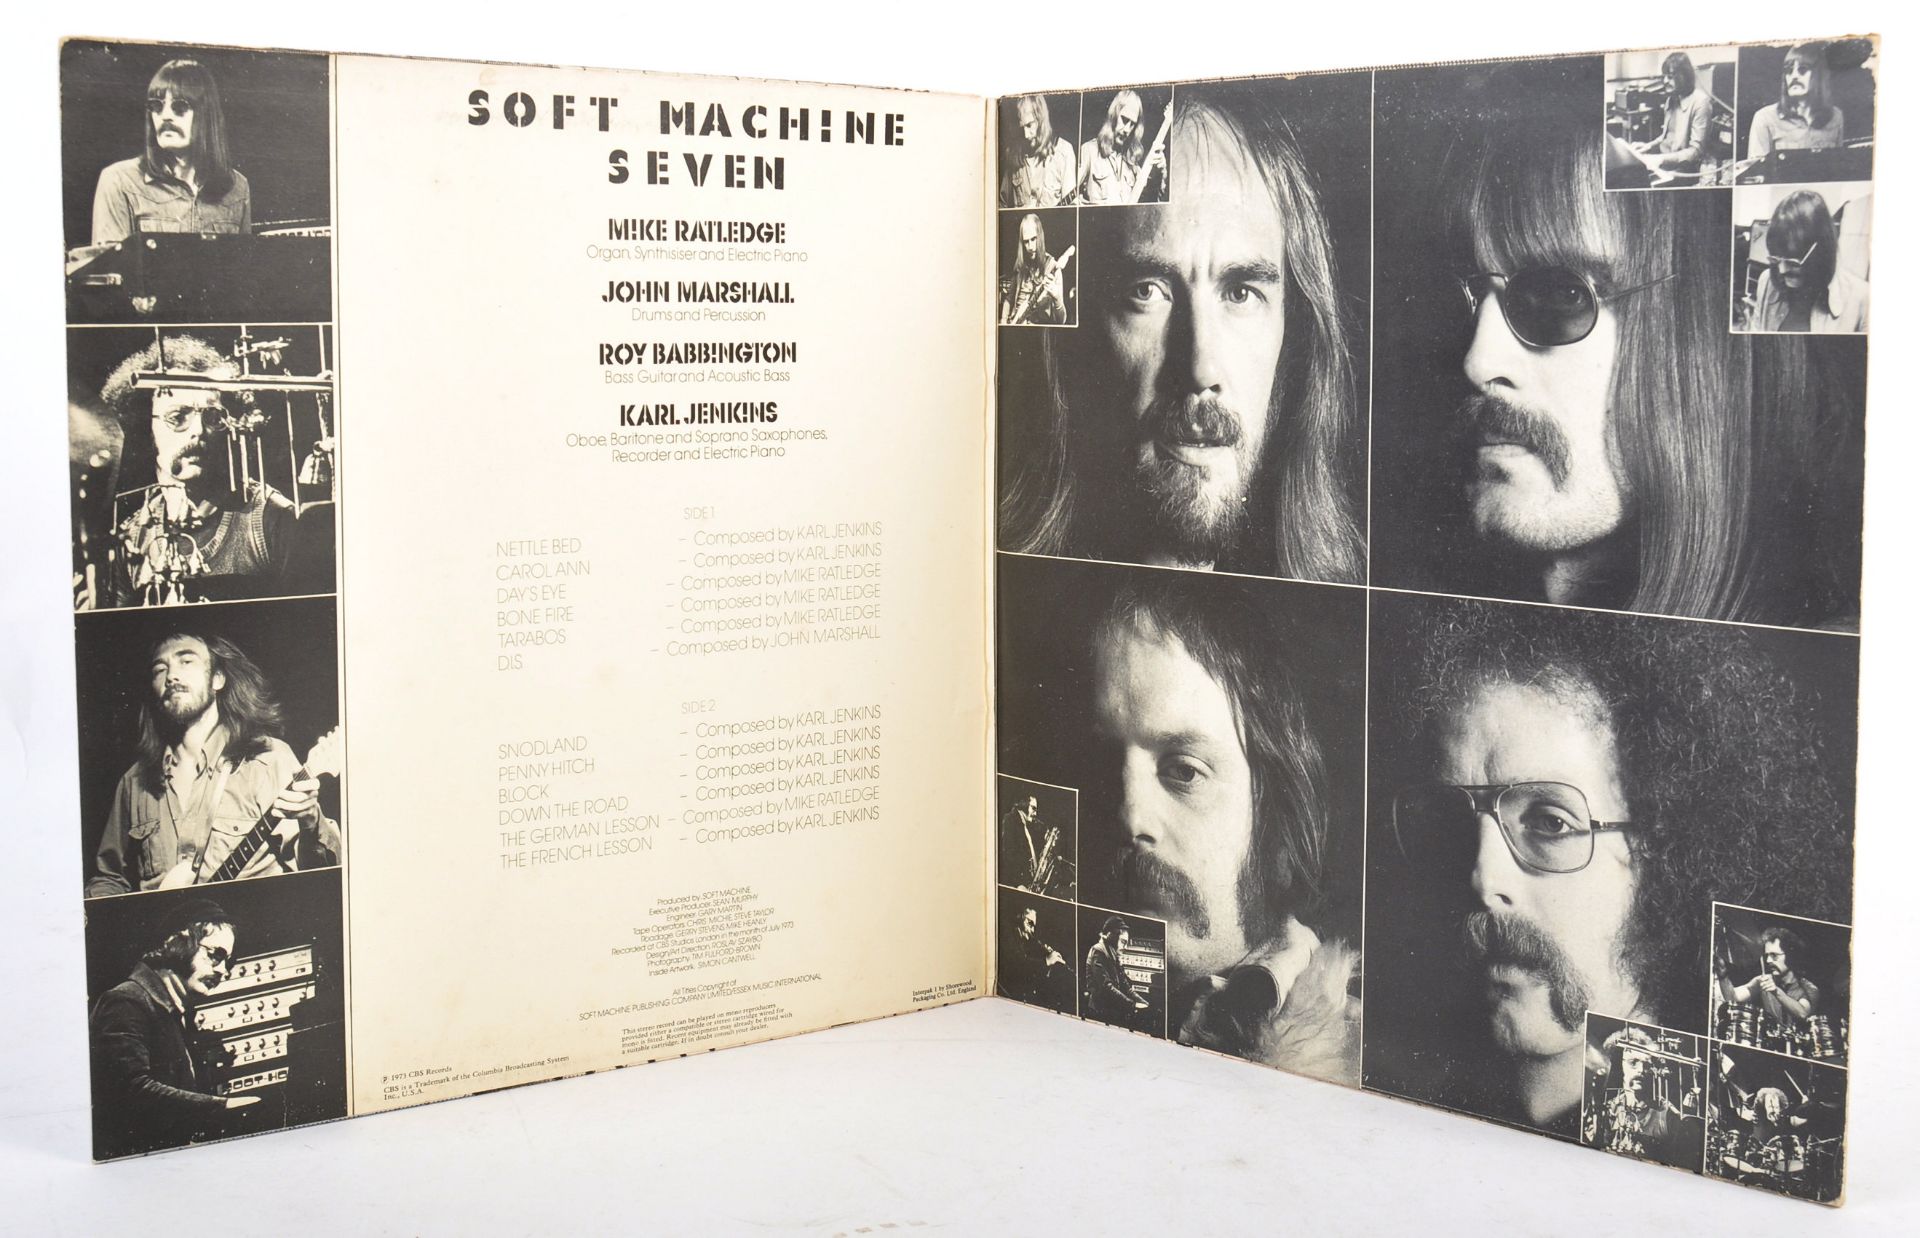 SOFT MACHINE - SEVEN - 1973 ORANGE CBS LABEL - Image 2 of 6